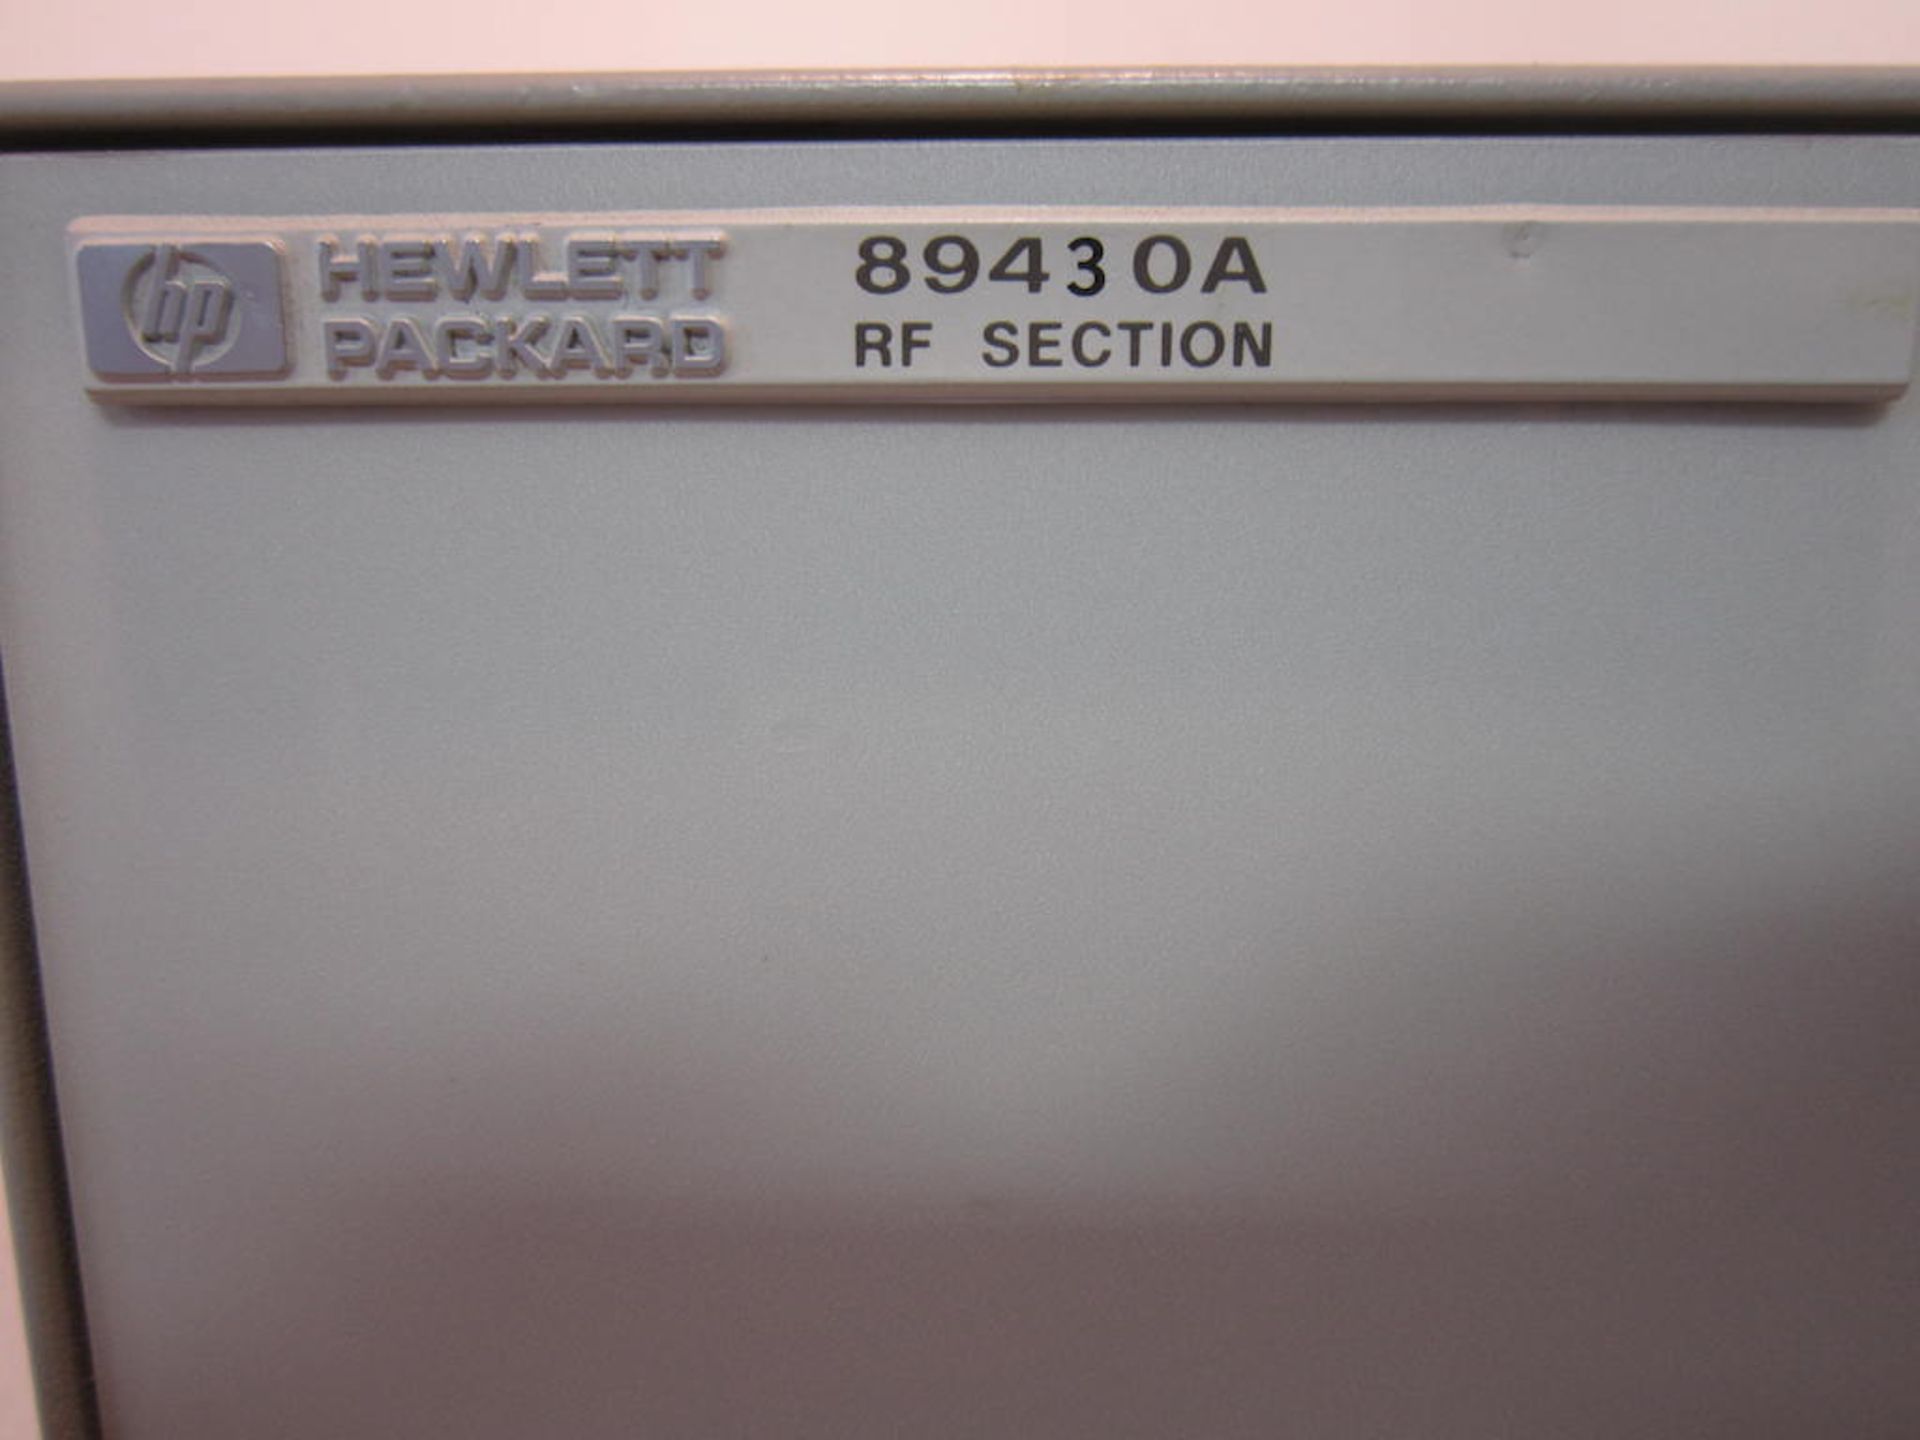 Hewlett Packard 89430A Rf Section - Image 3 of 5